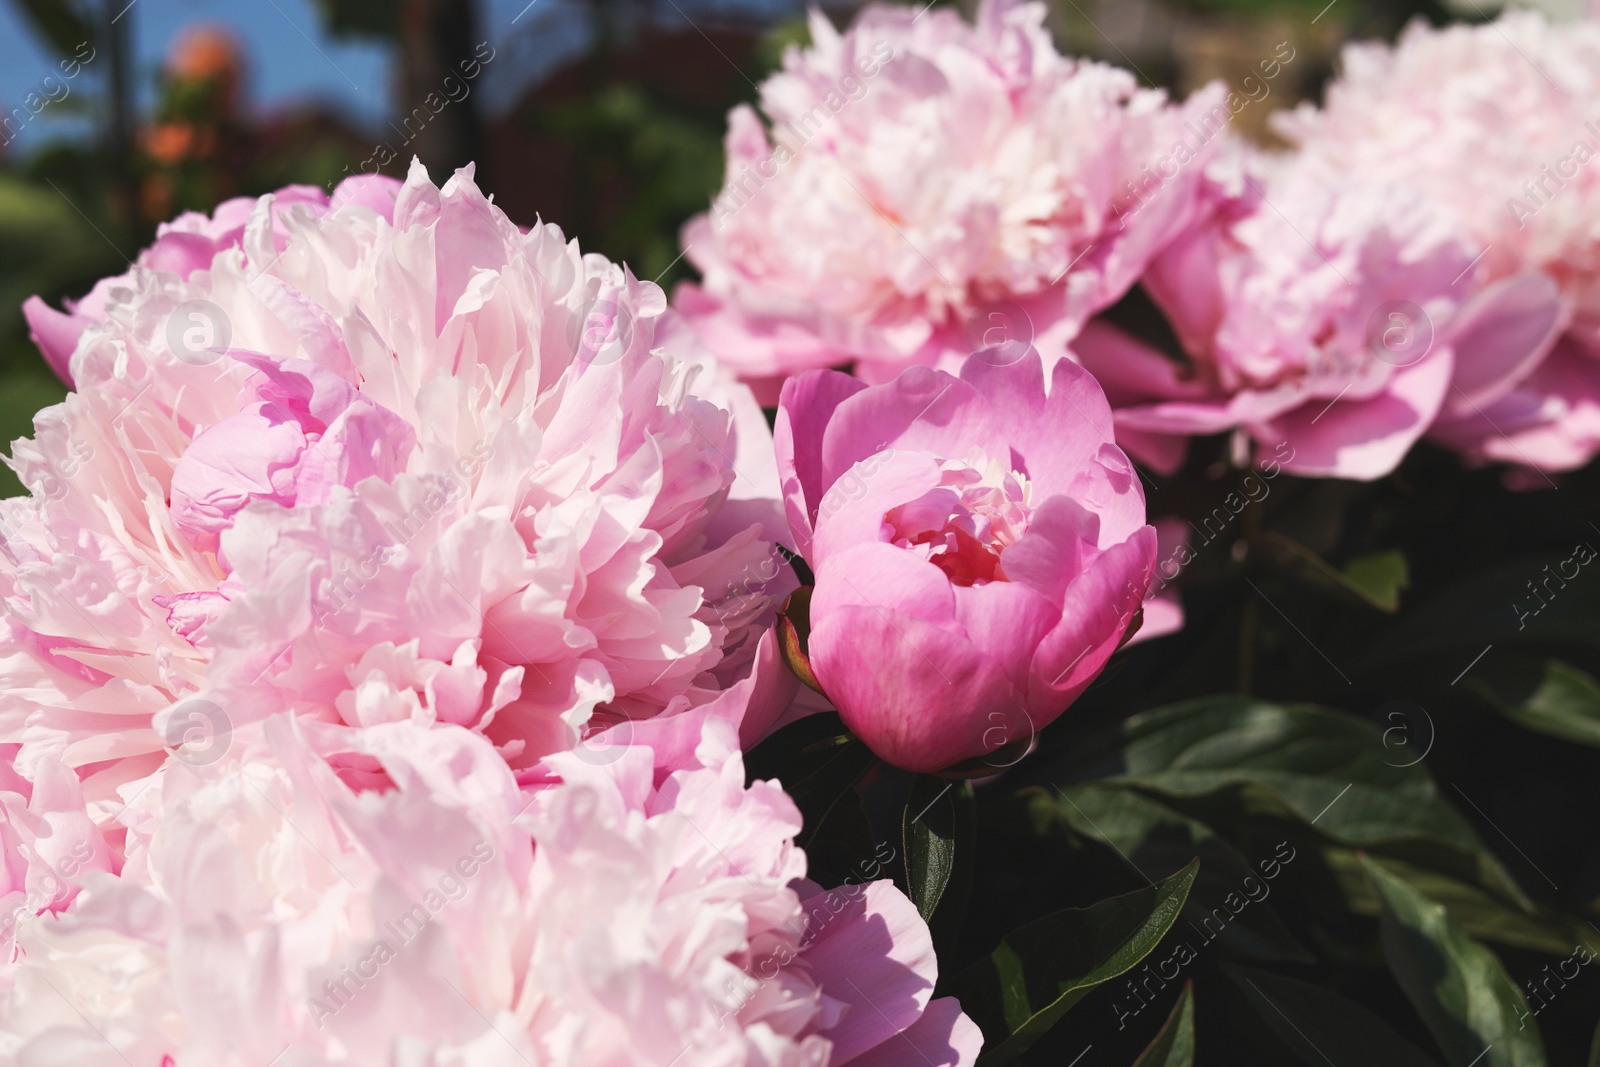 Photo of Wonderful pink peonies in garden outdoors, closeup